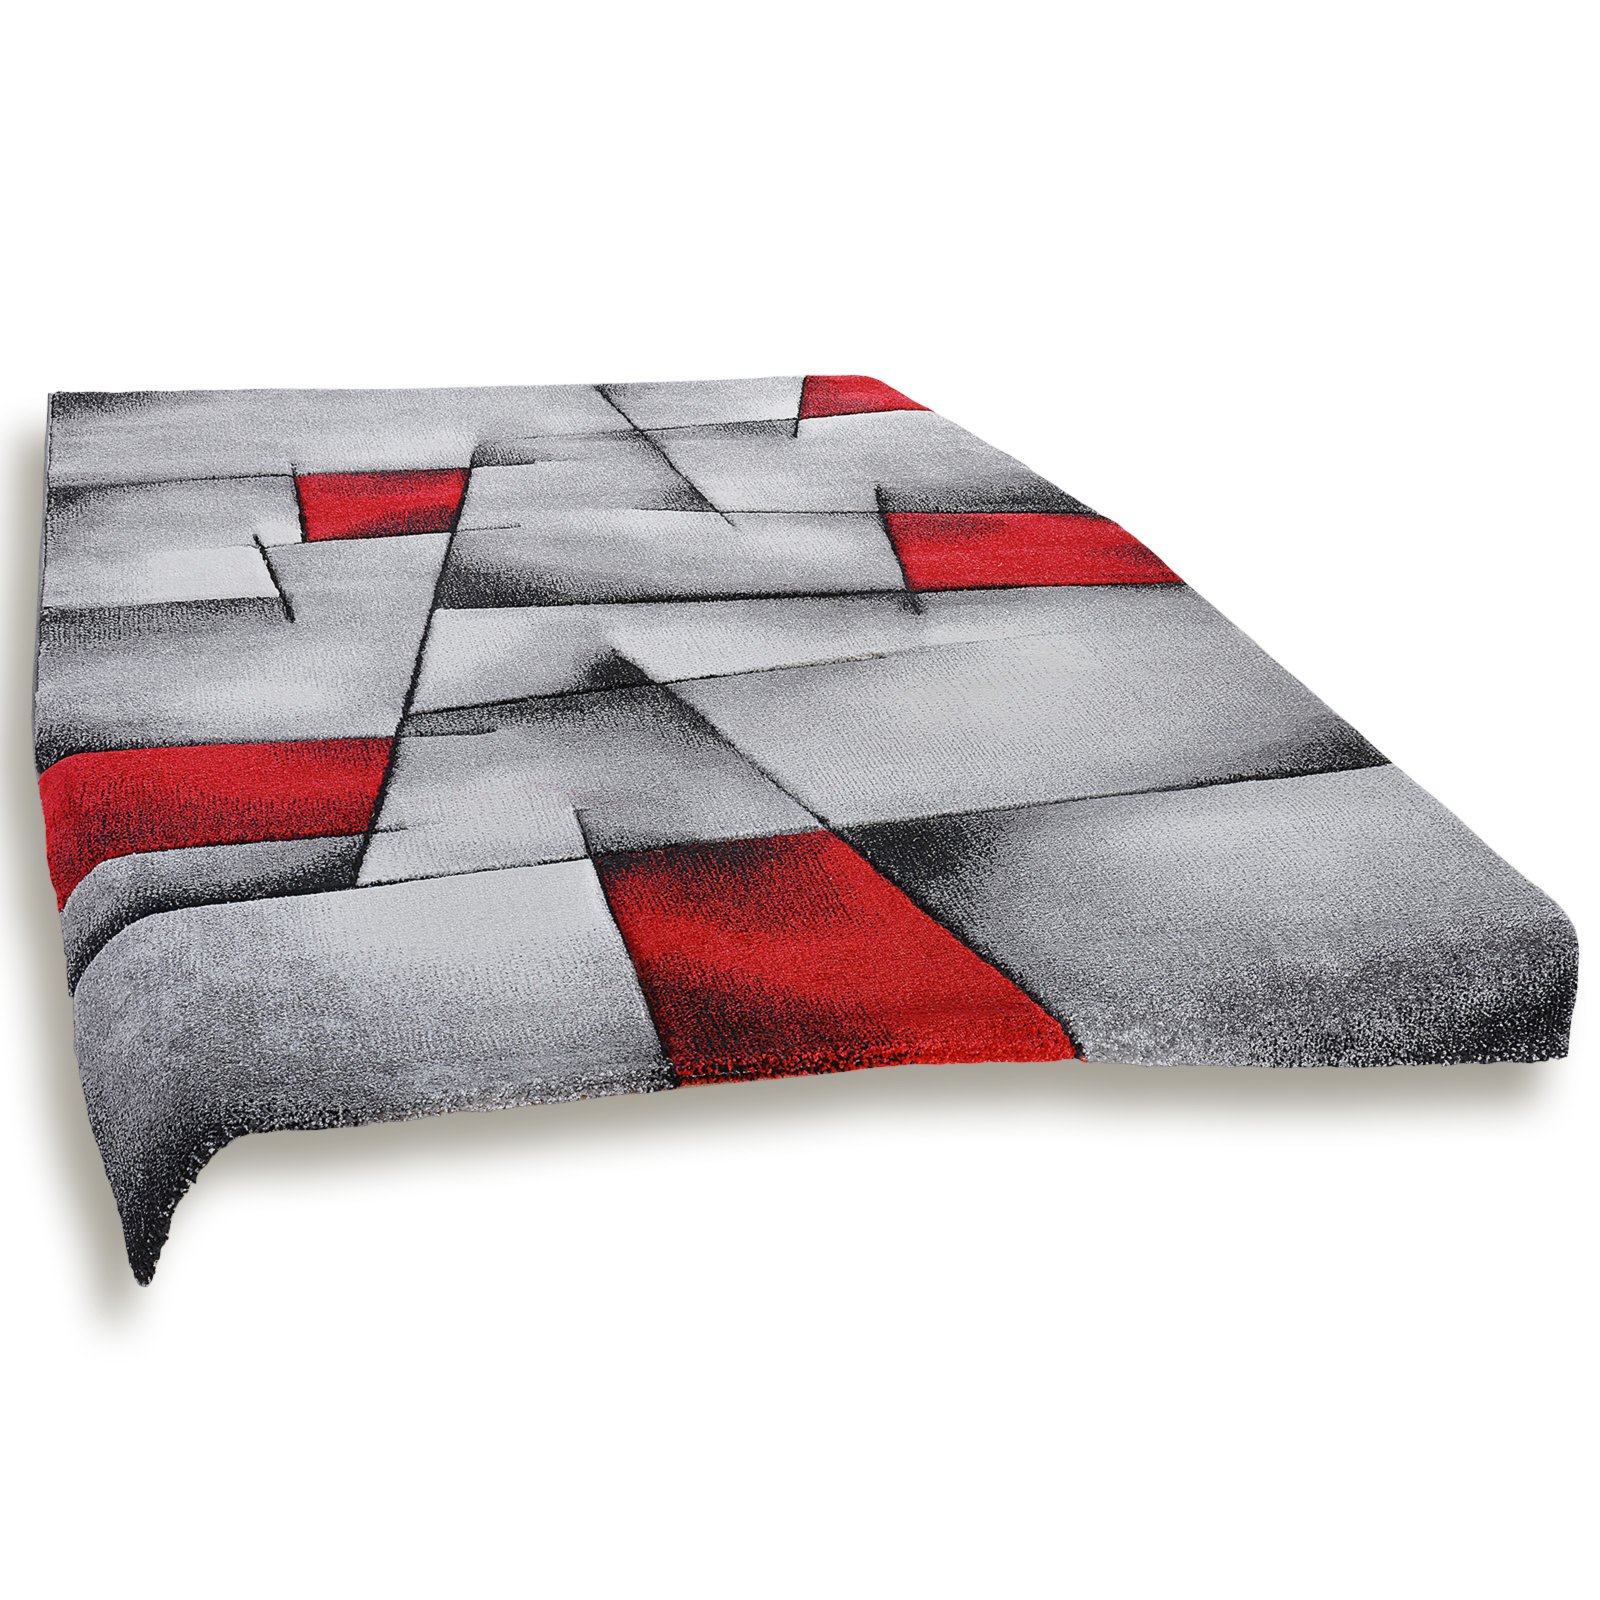 Moderner-Teppich Diamora, Rot, 120x170 cm